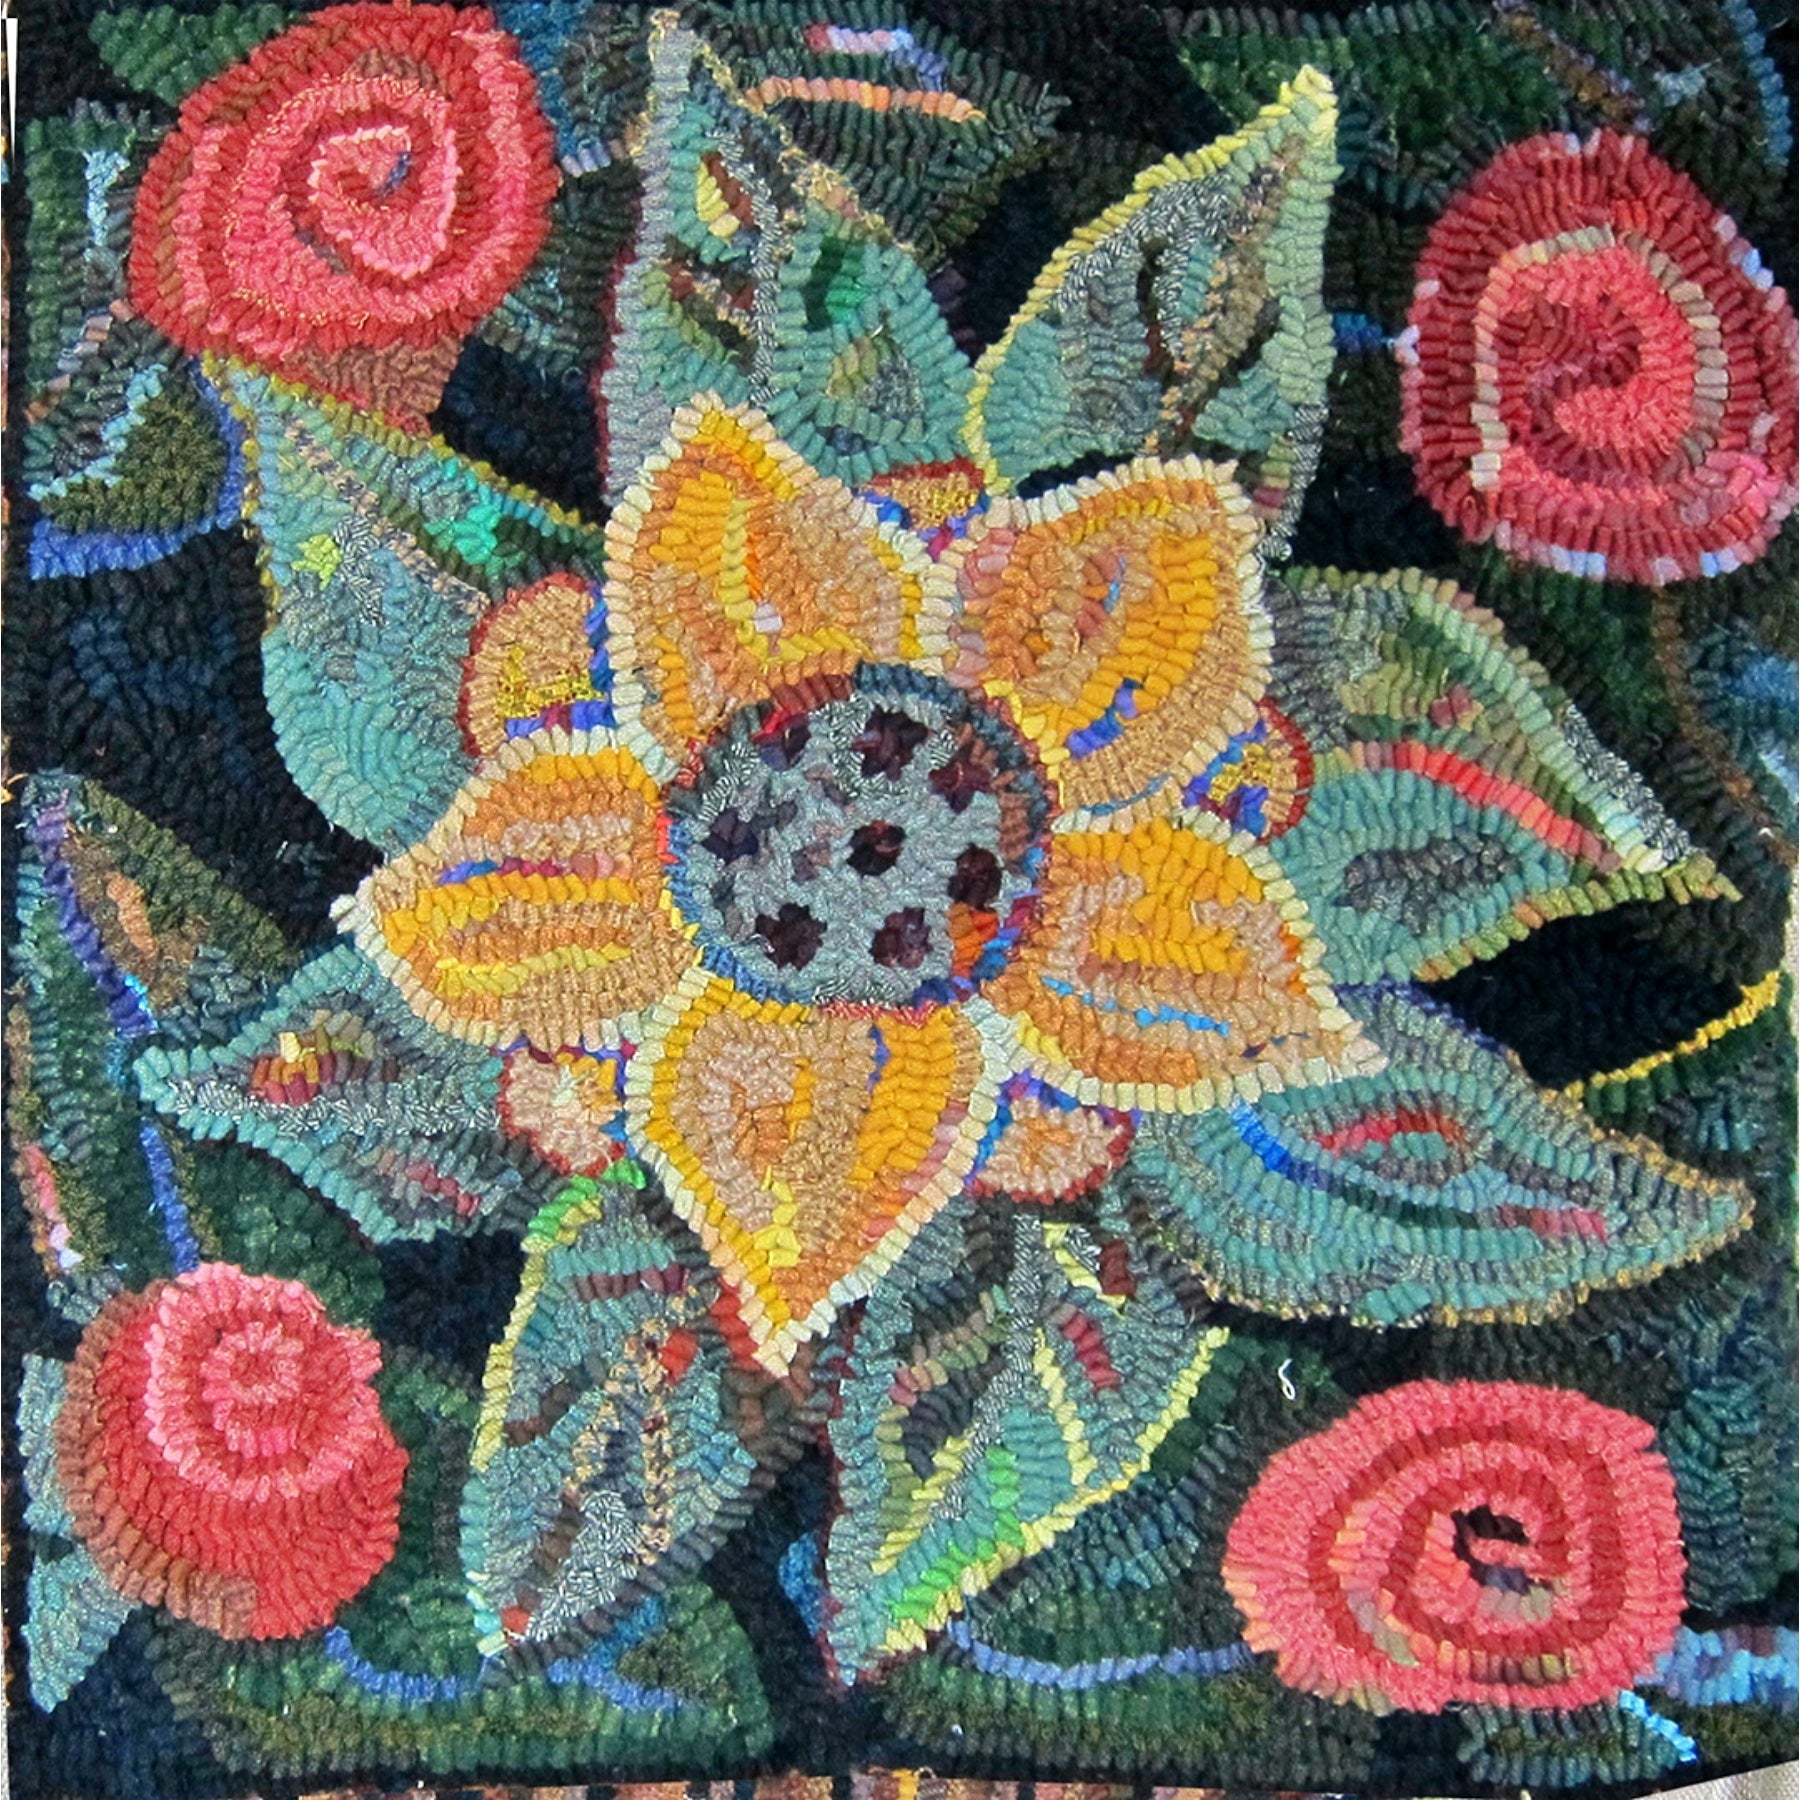 Padula and Roses, rug hooked by Cheryl Bollenbach